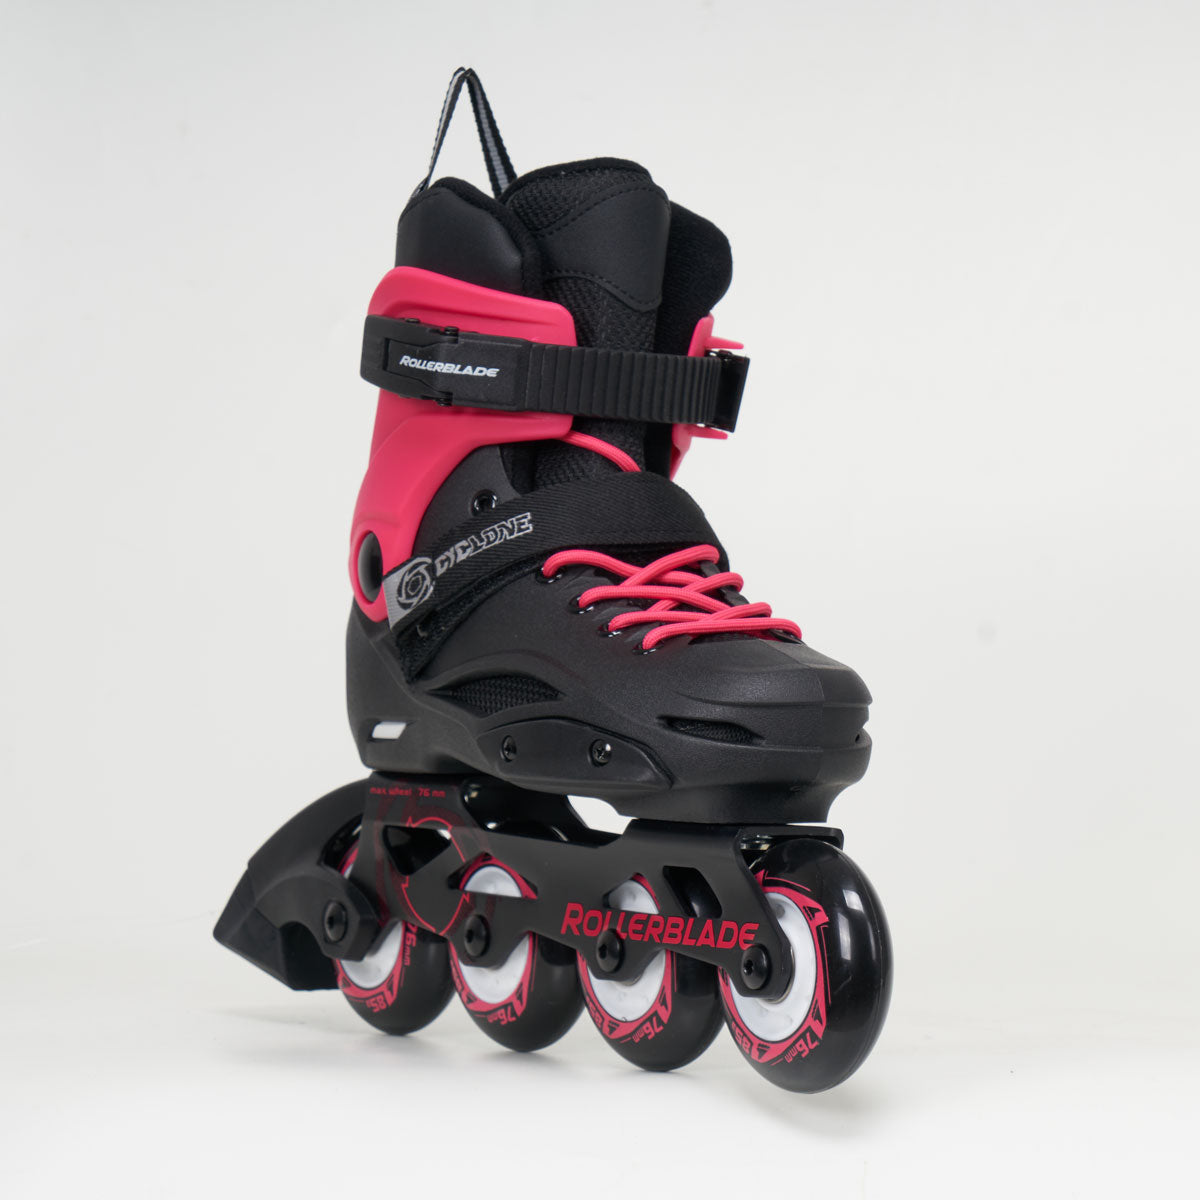 Rollerblade Cyclone G Junior Skates - Black / Pink